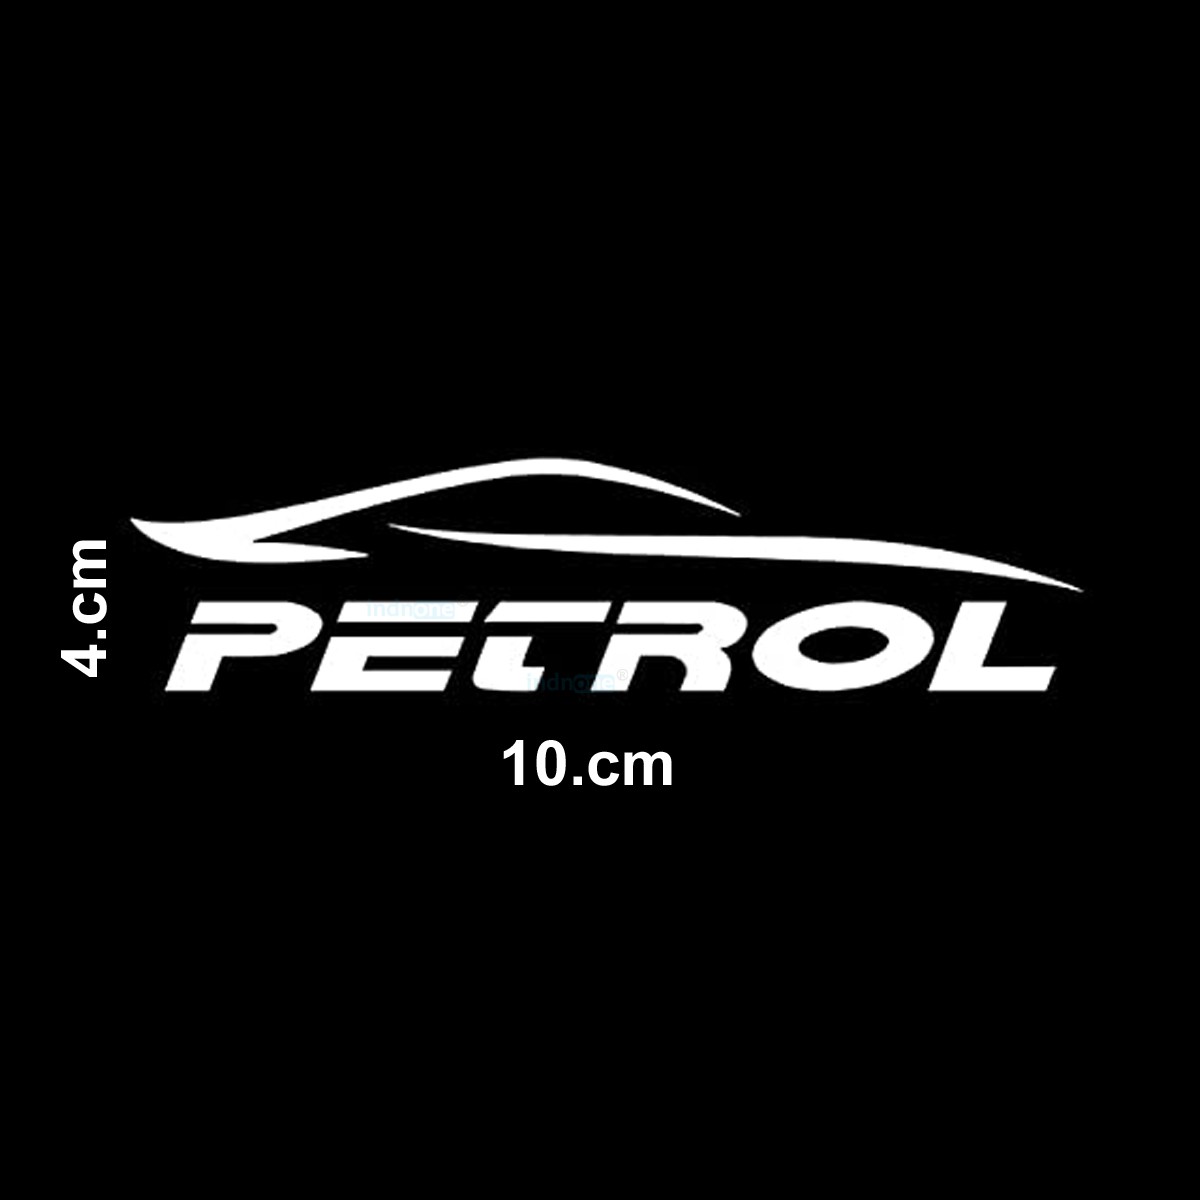 indnone® Car  Petrol Logo Sticker for Car. Car Sticker Stylish Fuel Lid | White Color Standard Size